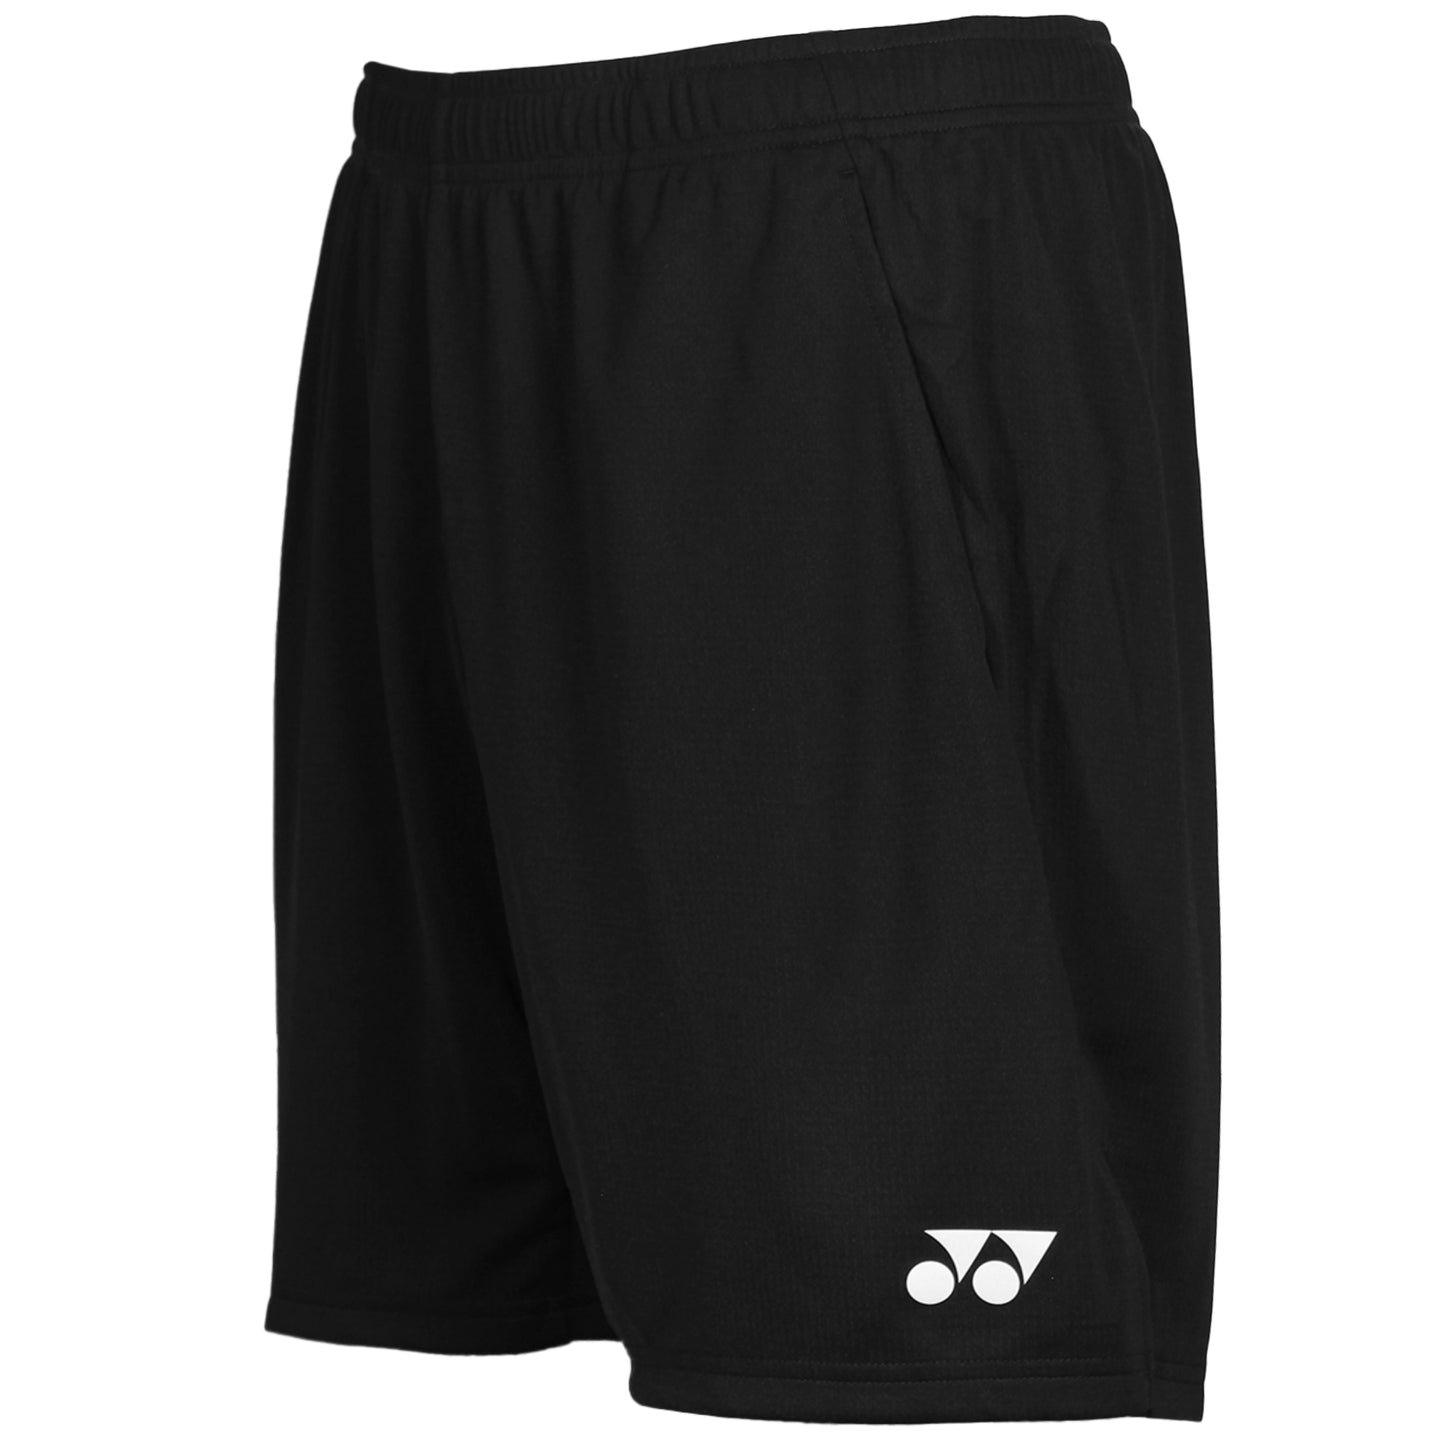 Yonex Men's Knit Short 15170 Black